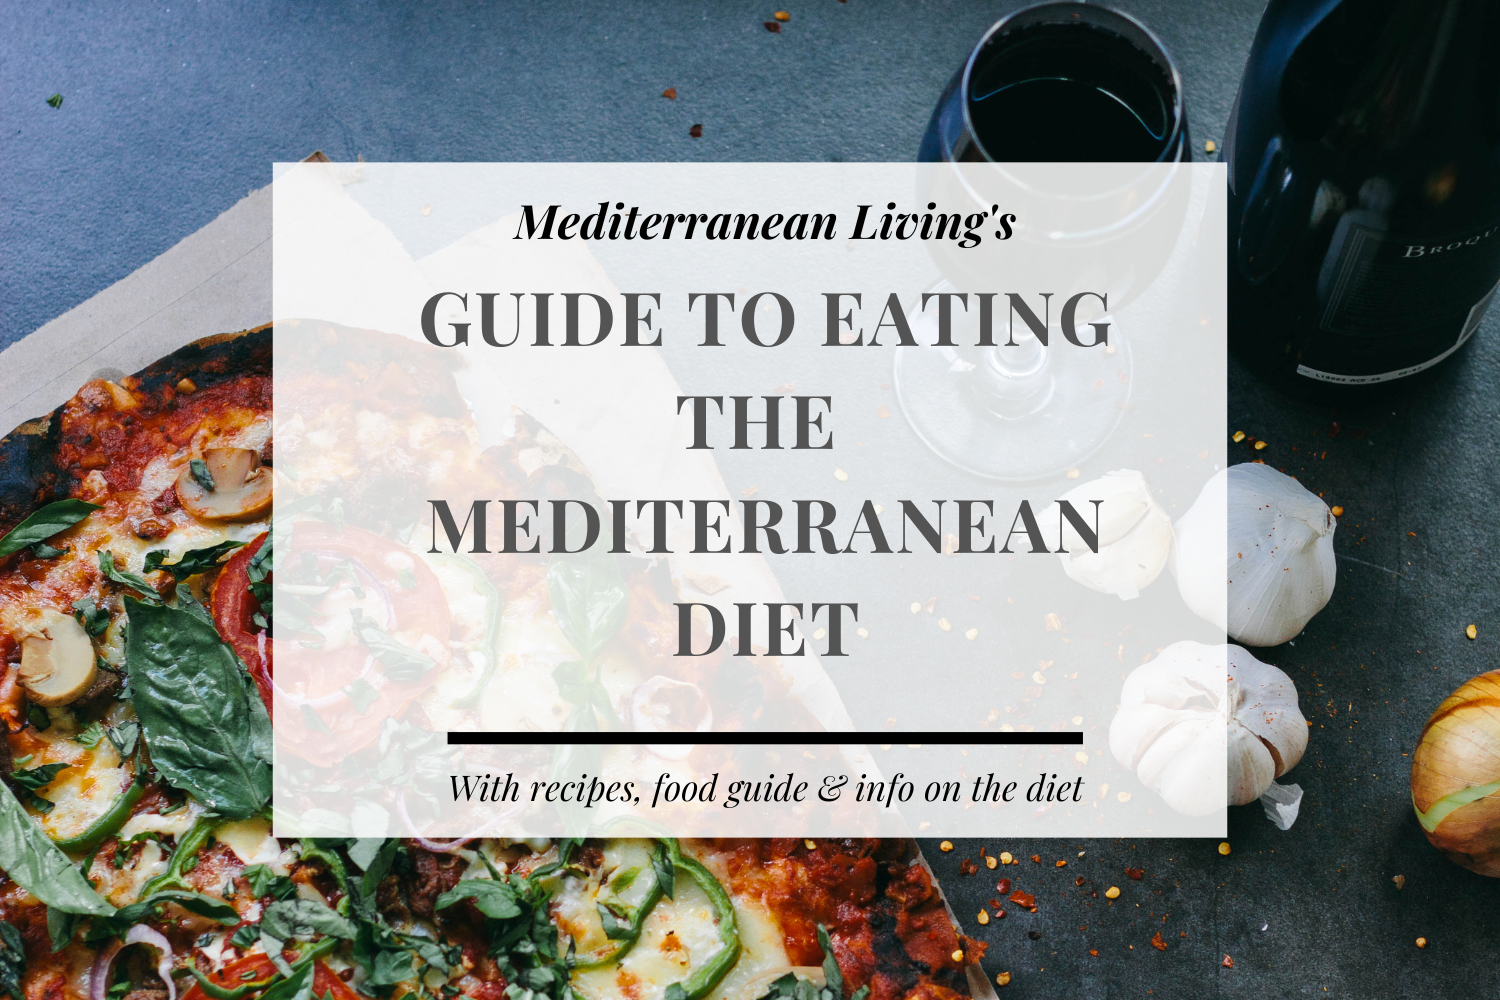 Ultimate Guide to Eating the Mediterranean Diet - Mediterranean Living